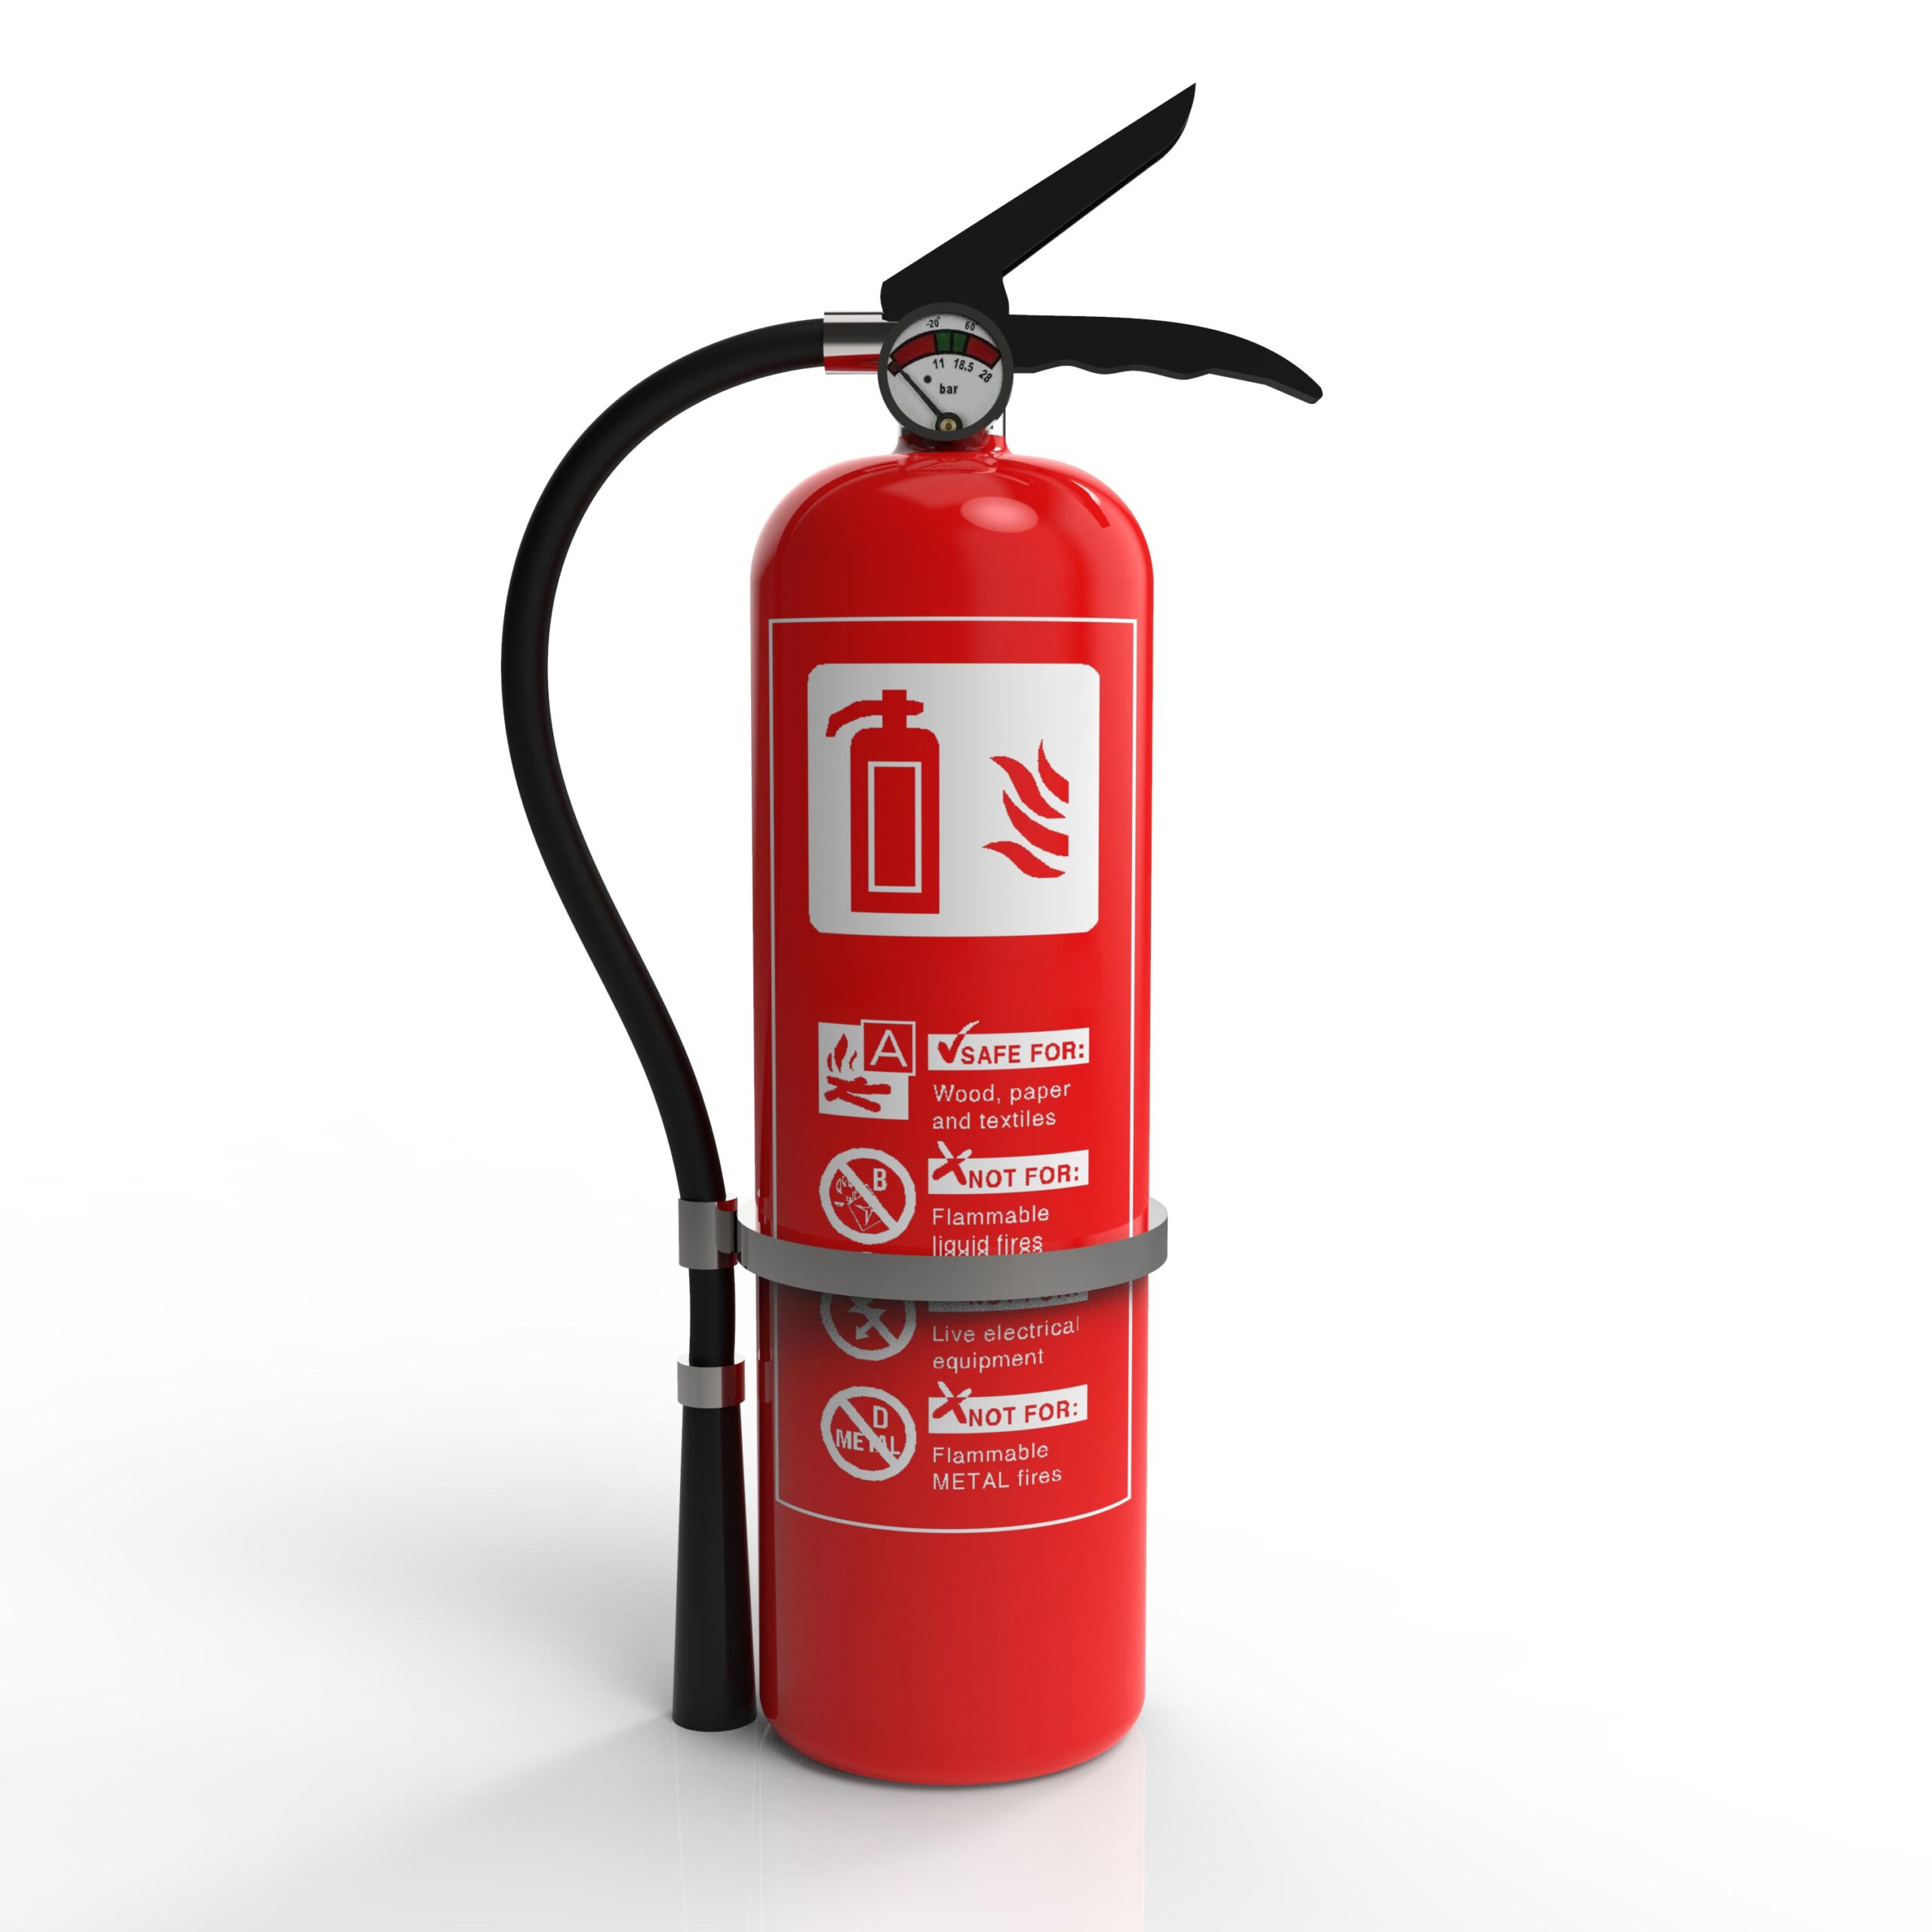 rendering extinguisher001 scaled